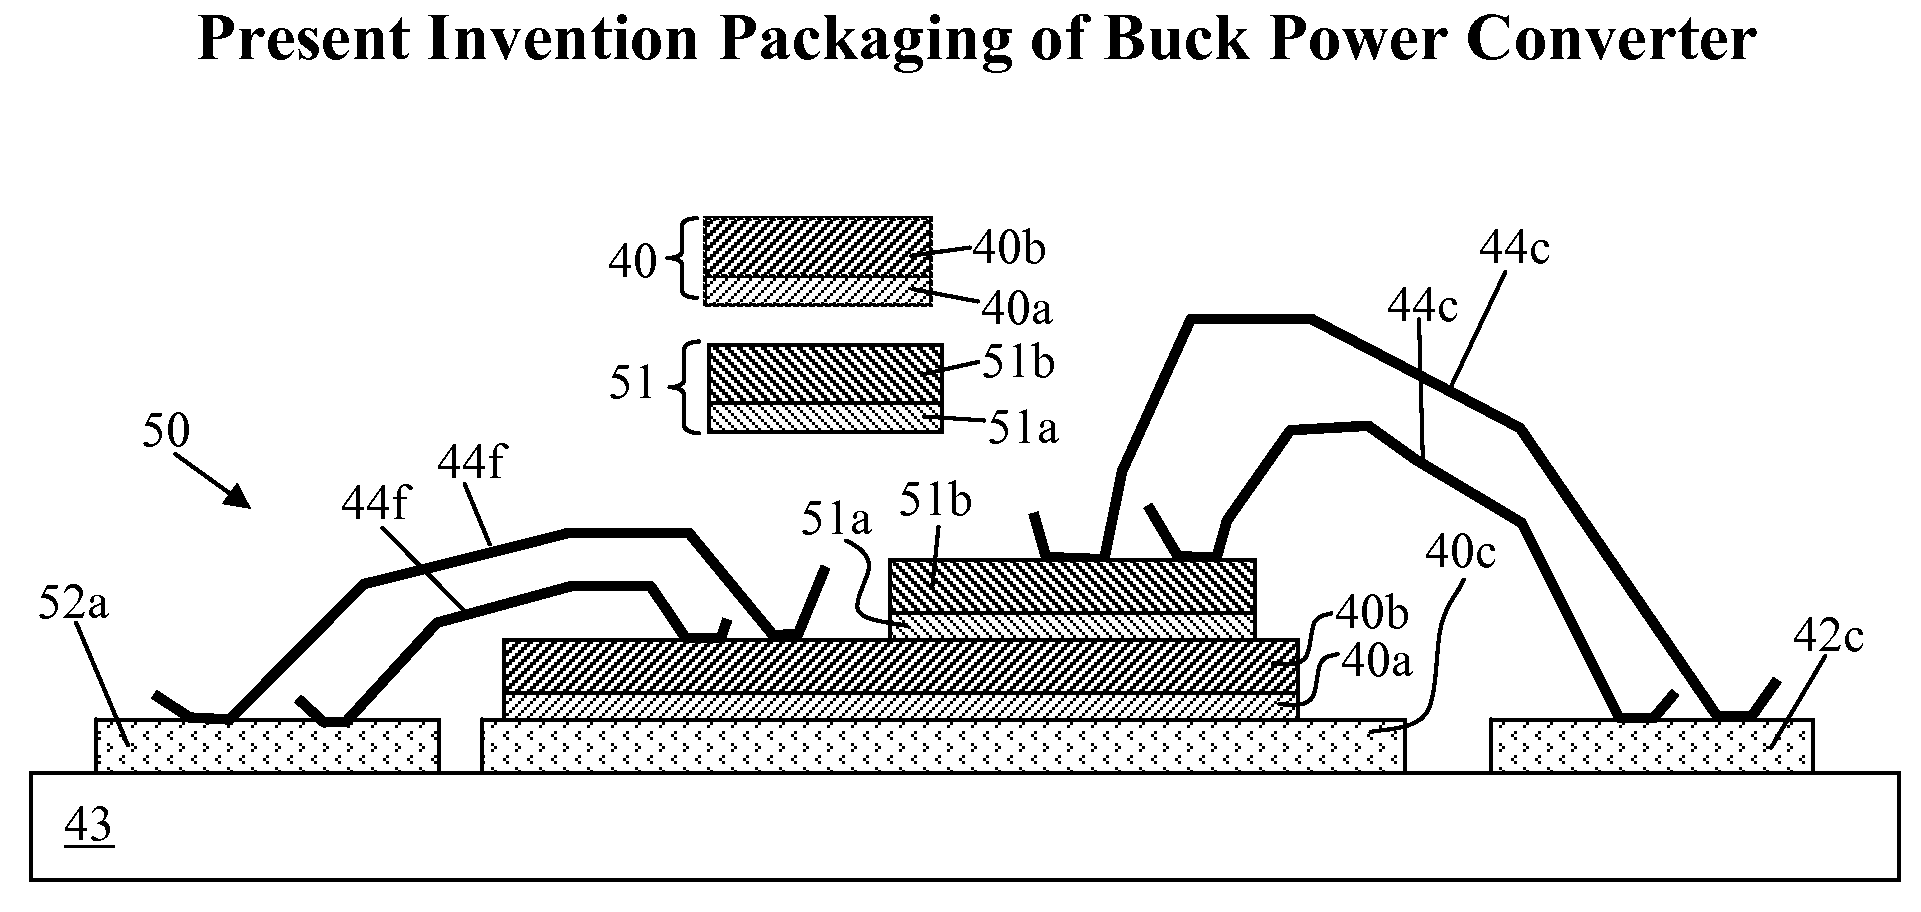 Multi-die DC-DC buck power converter with efficient packaging